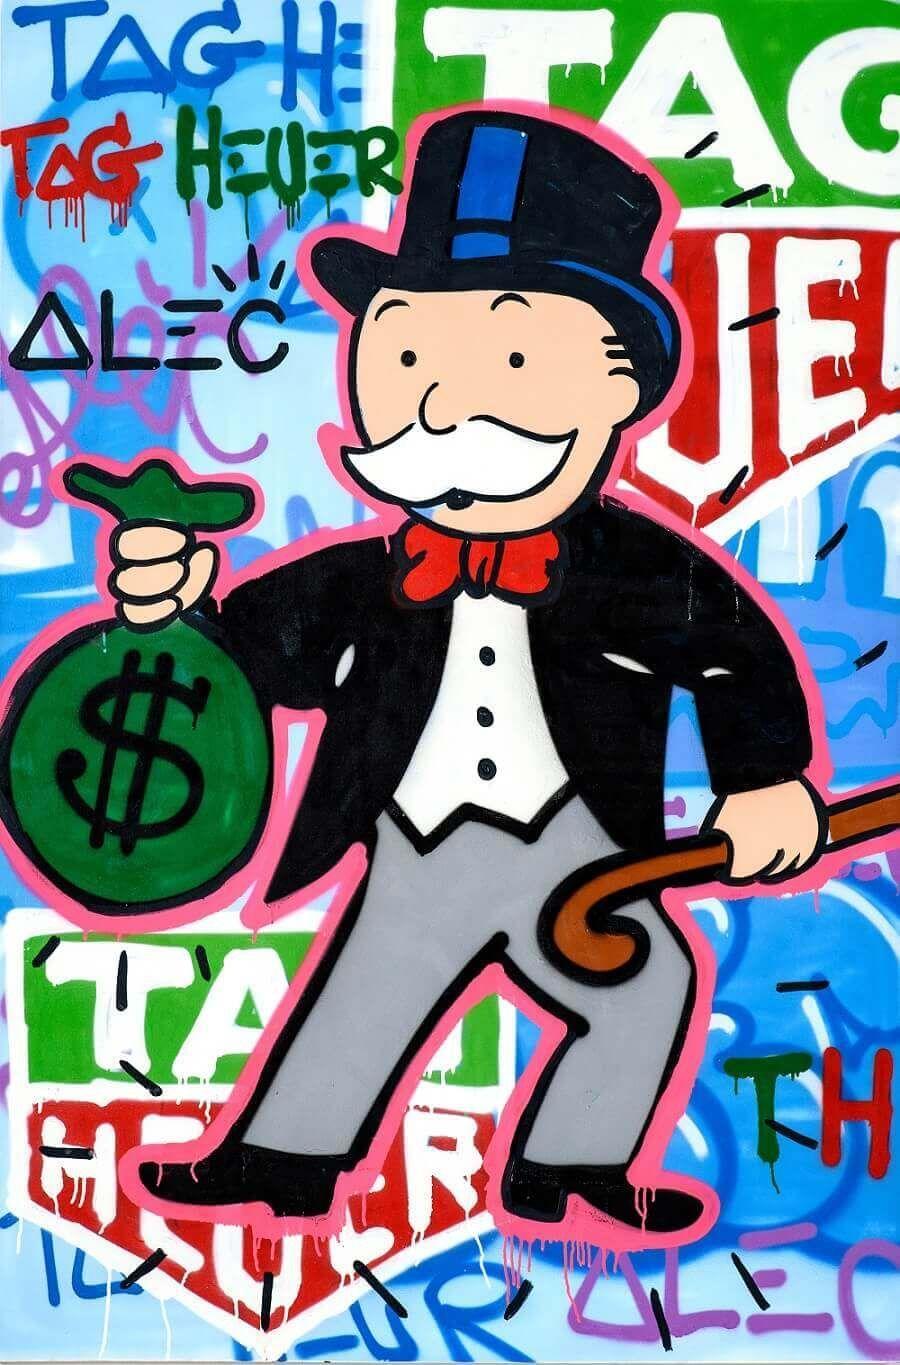 Scrooge Money Bags by Alec Monopoly  Guy Hepner  Art Gallery  Prints for  Sale  Chelsea New York City